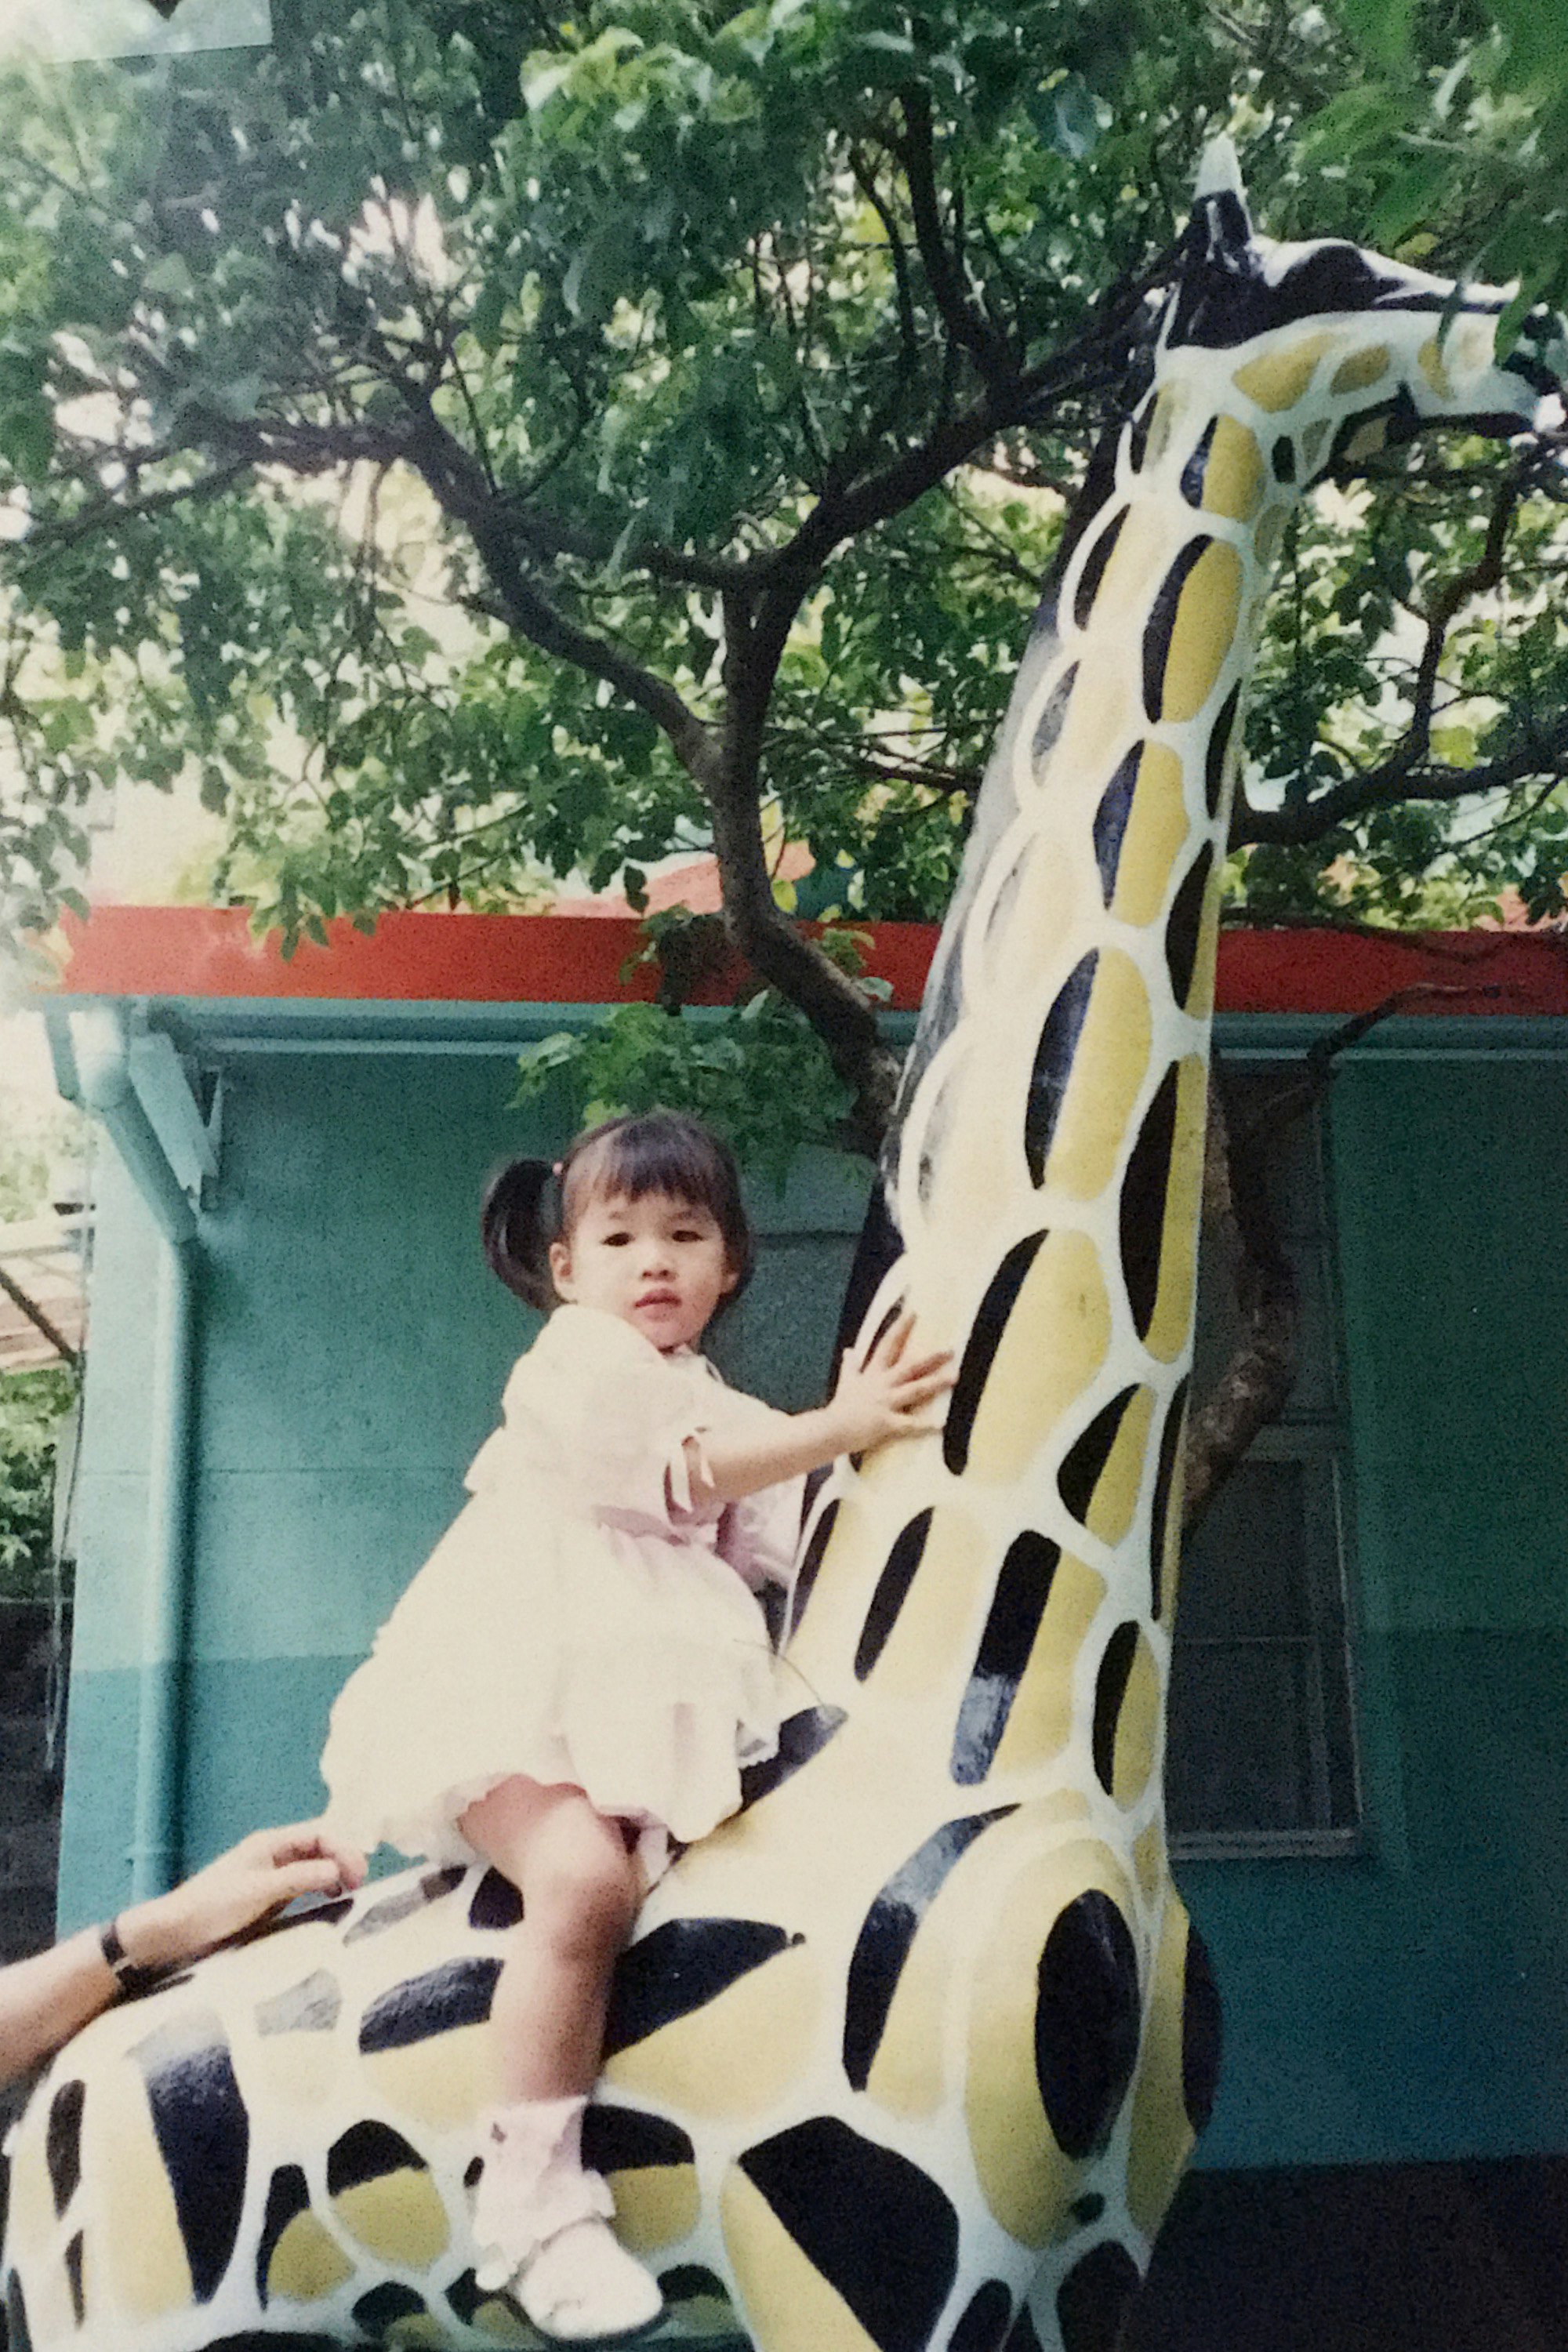 Li as a child on a large plastic giraffe in a local park, Taipei, Taiwan. 1994.